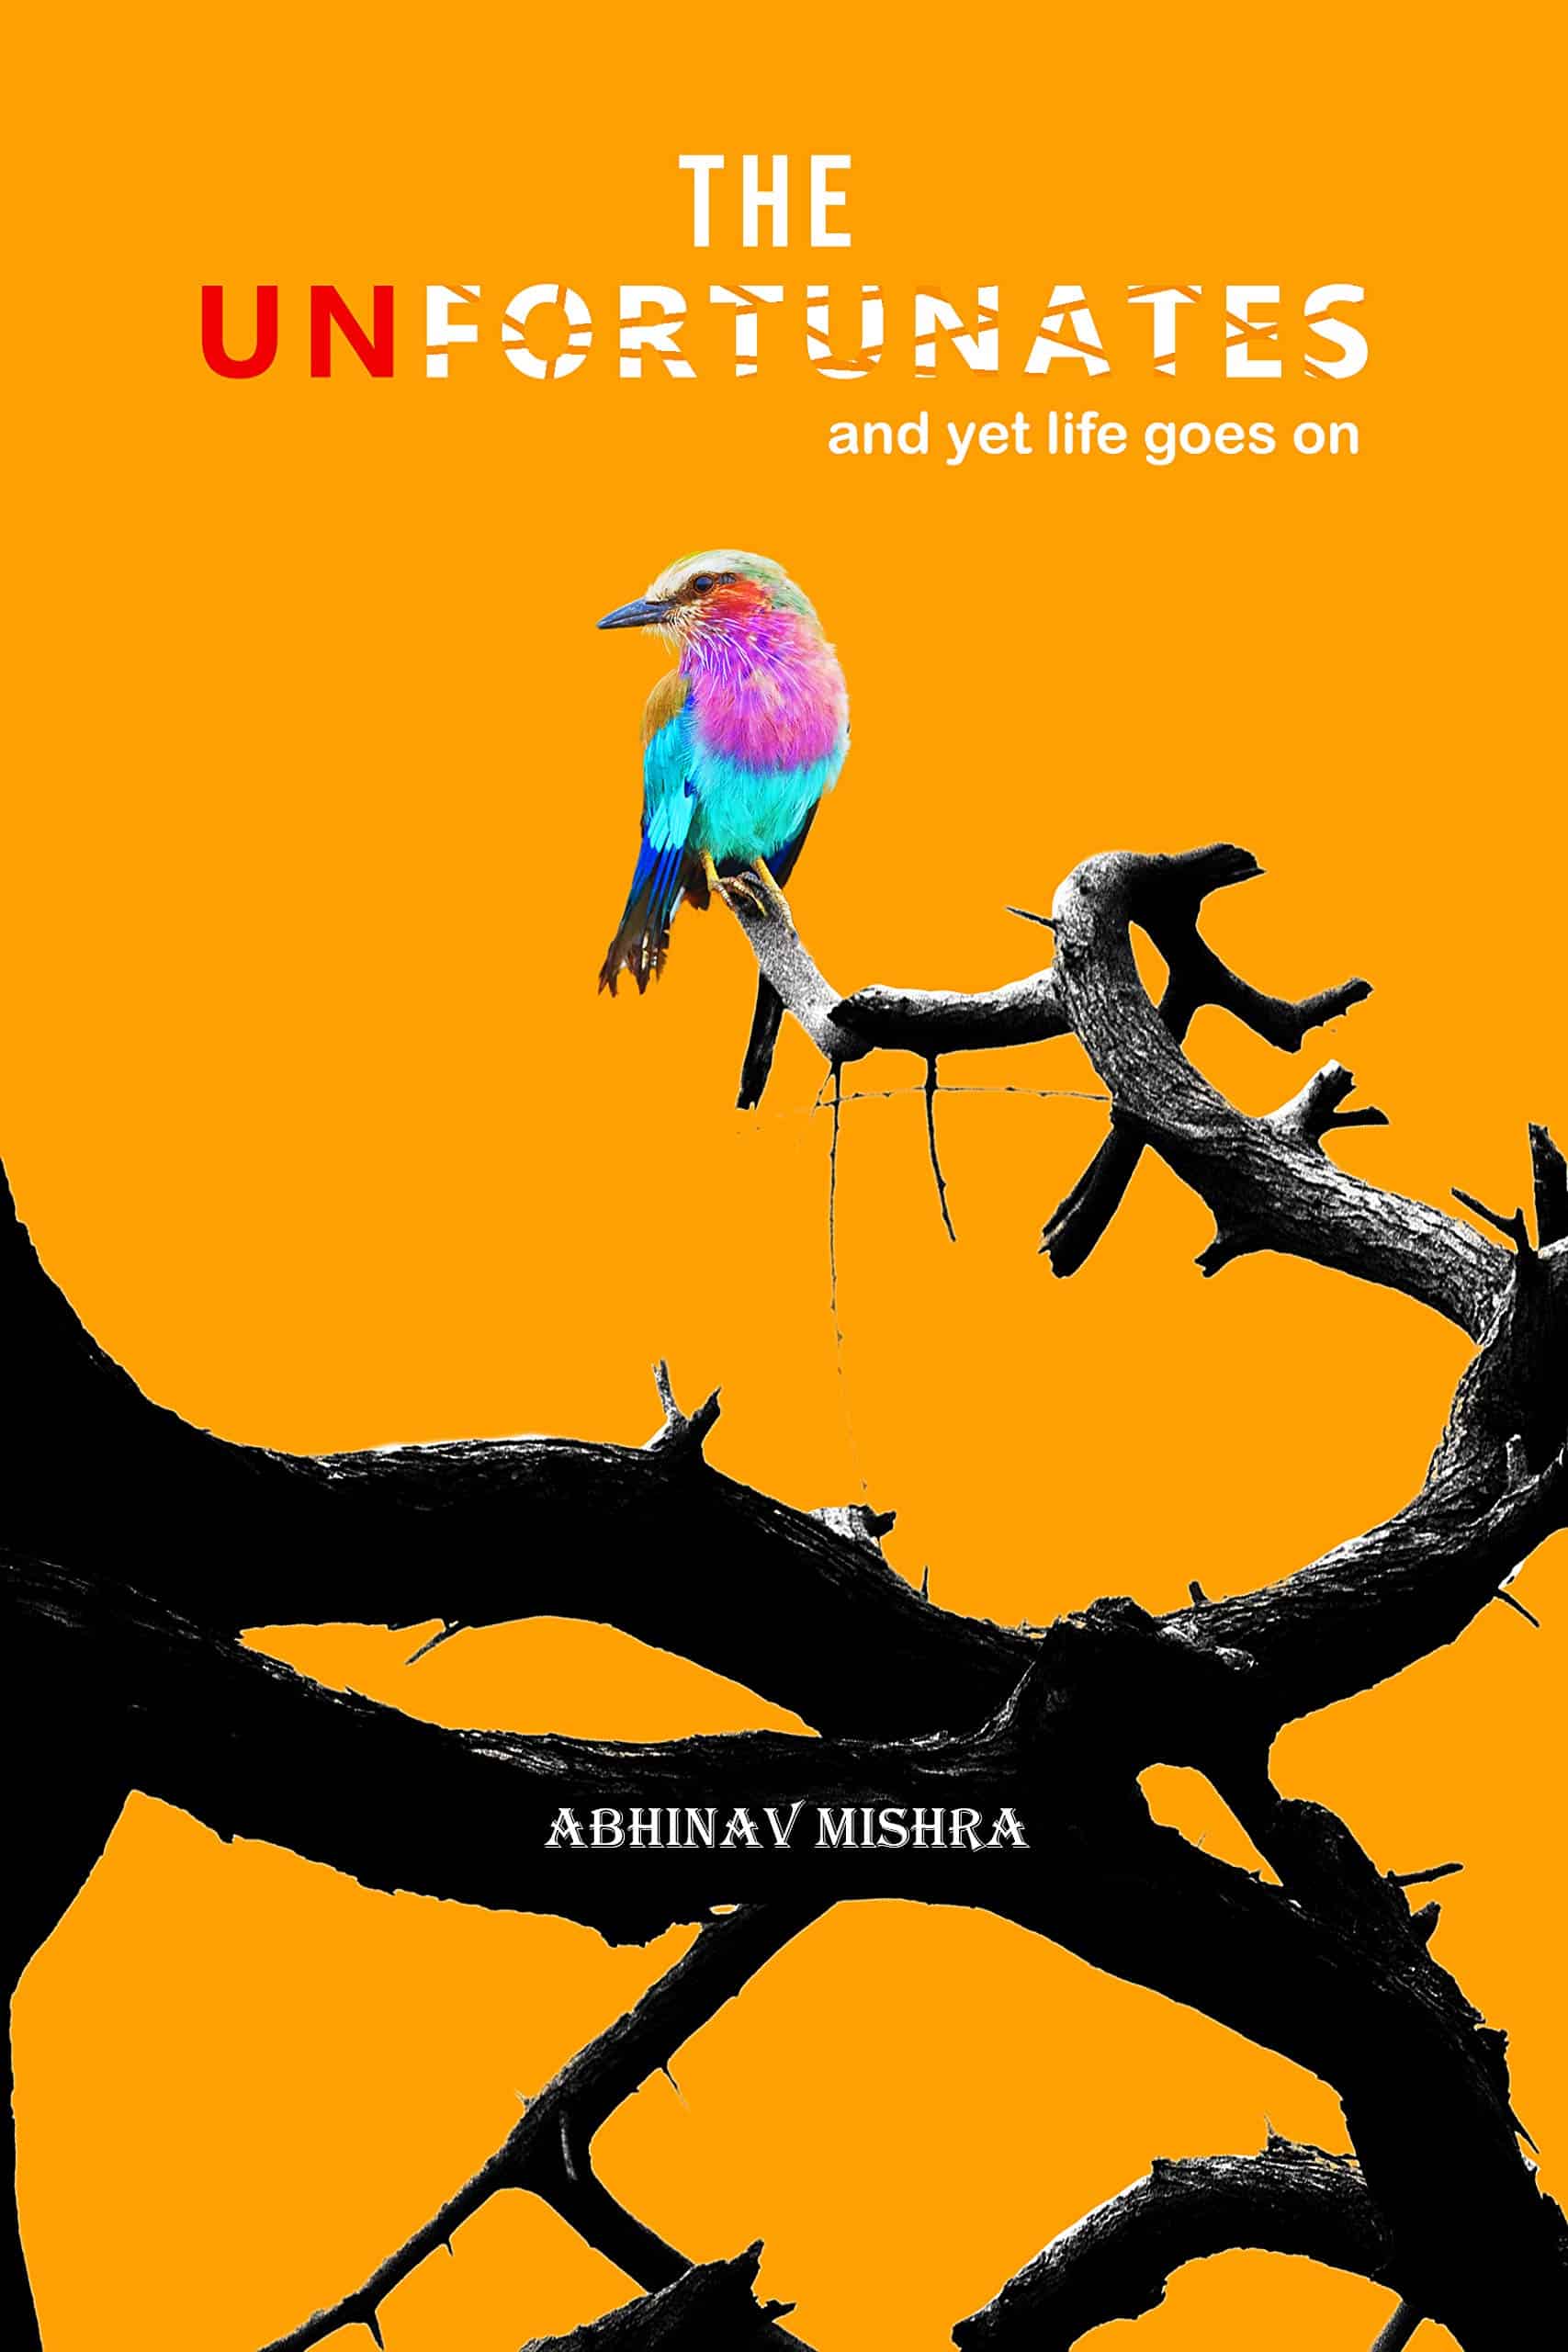 The Unfortunates - A journey abhinav mishra